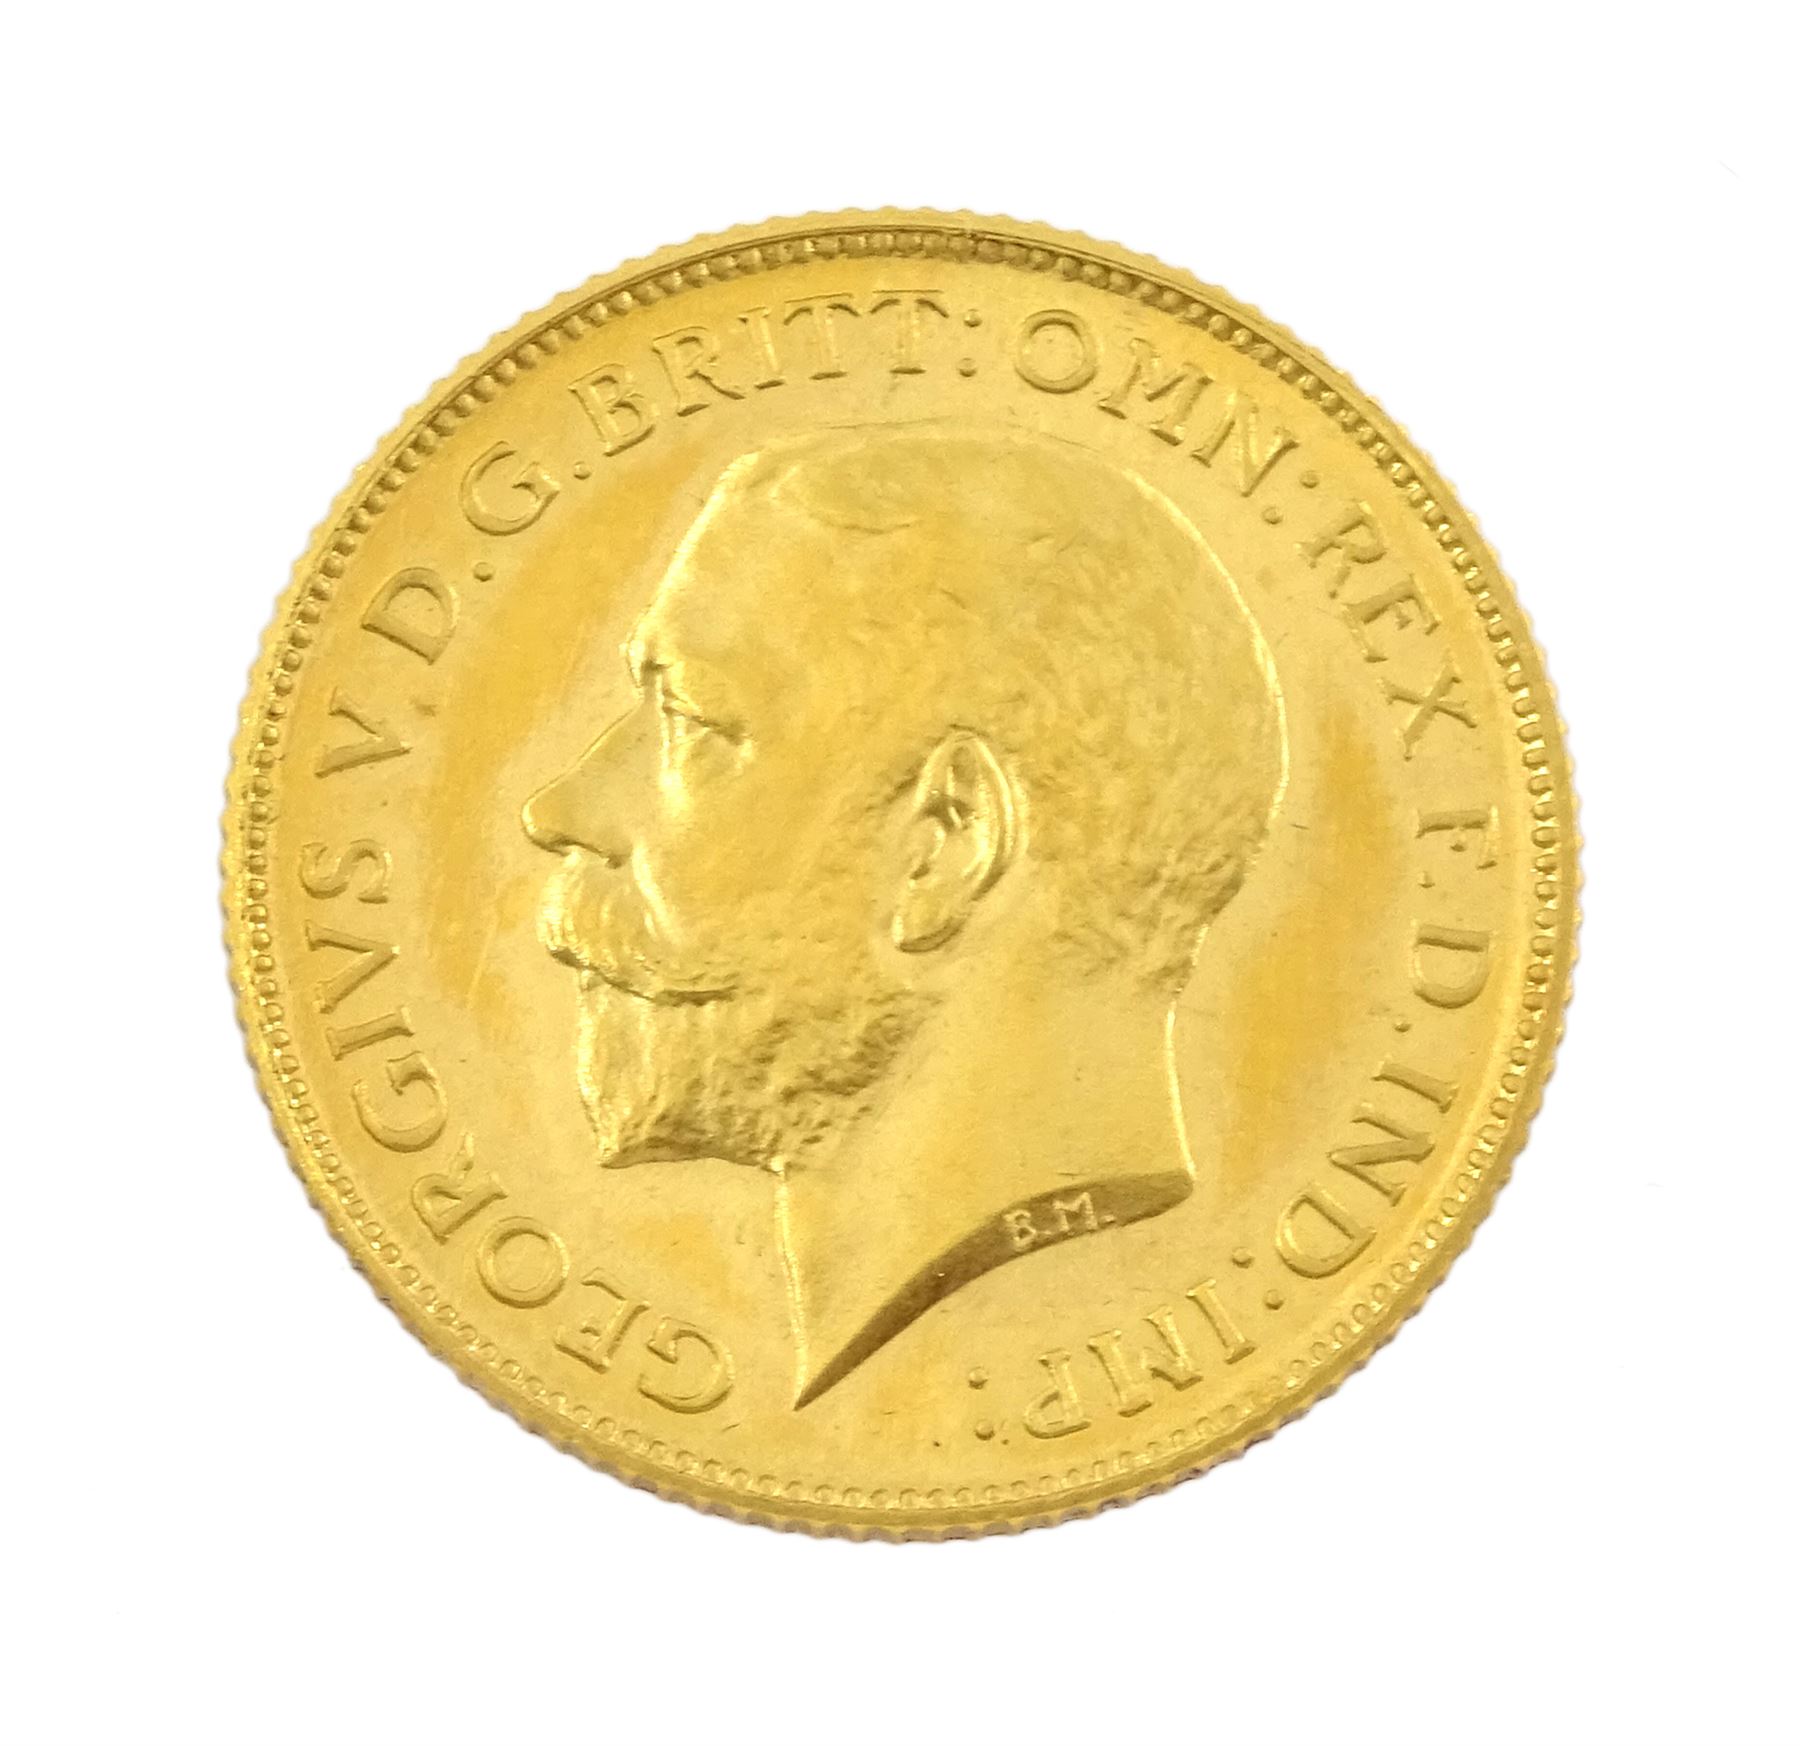 King George V 1911 proof long coin set - Image 10 of 28